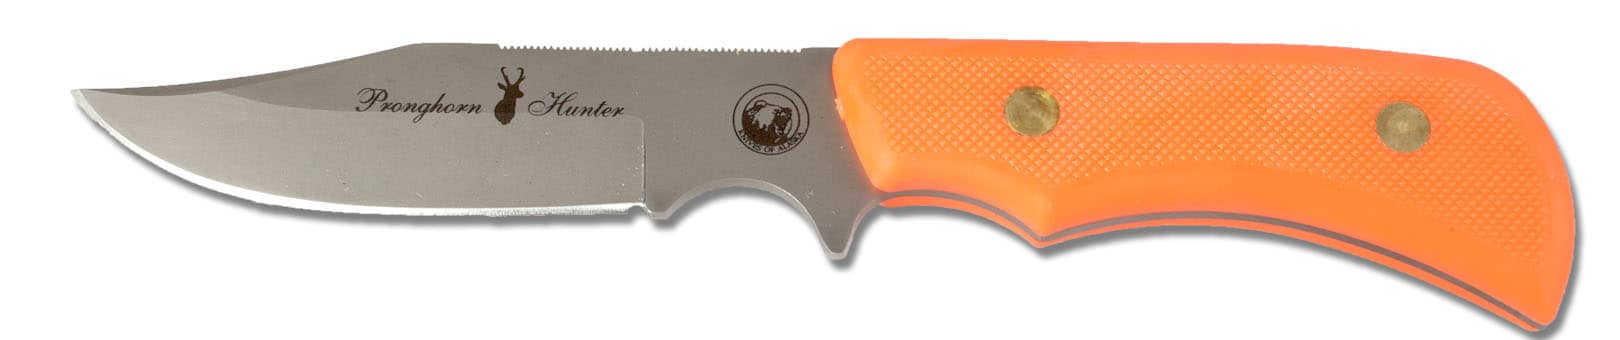 Knives Of Alaska Pronghorn Hunter Orange Suregrip Fixed Blade Knife